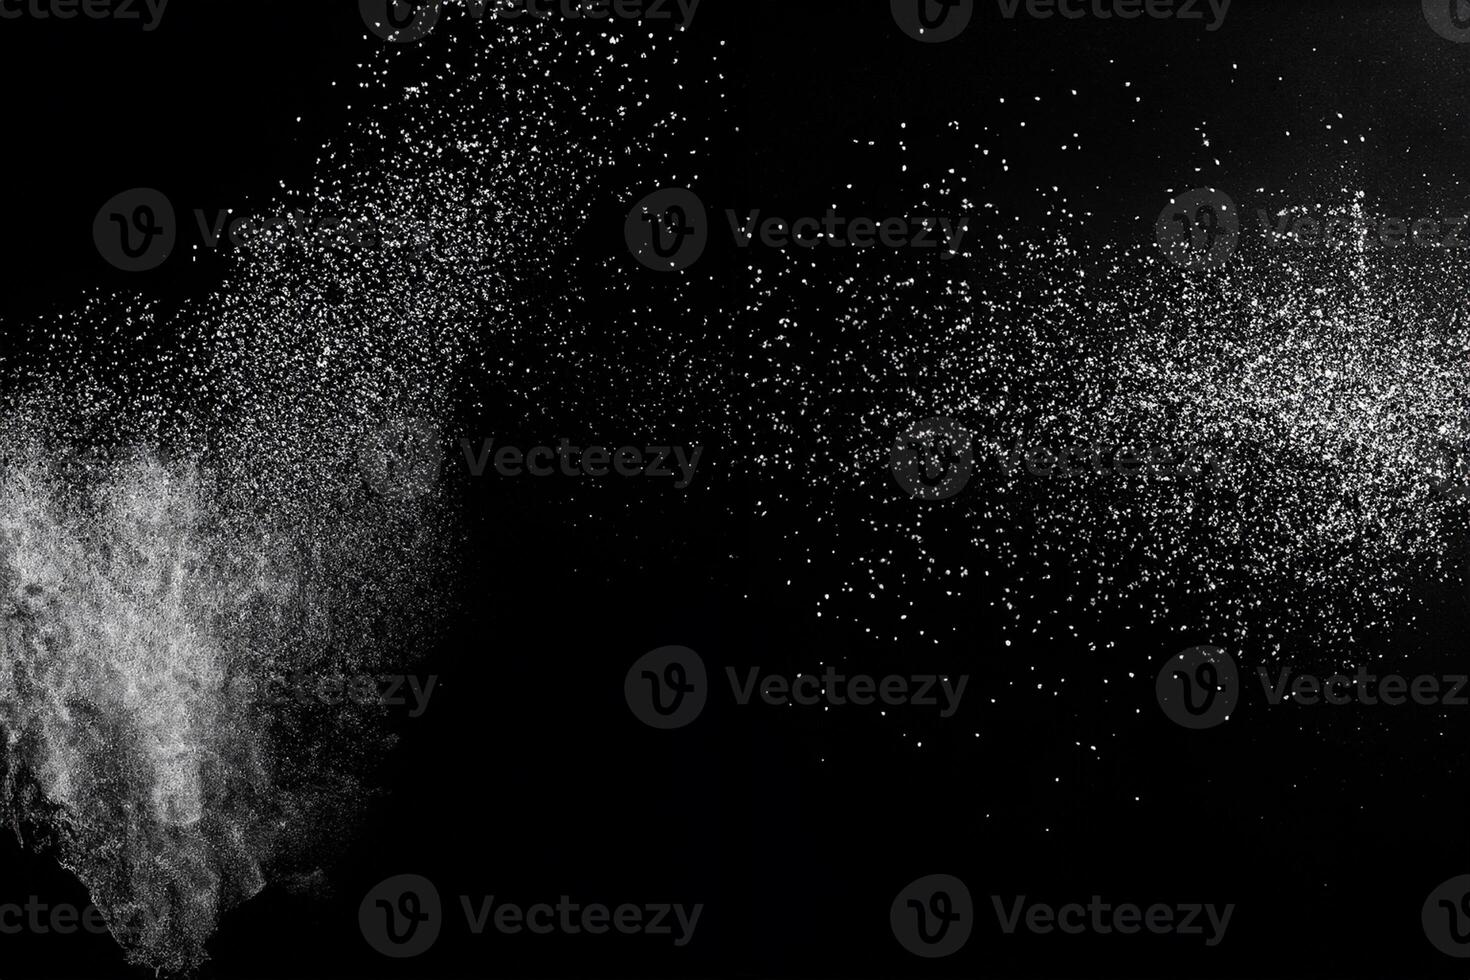 White powder explosion cloud against black background.White dust particles splash. photo